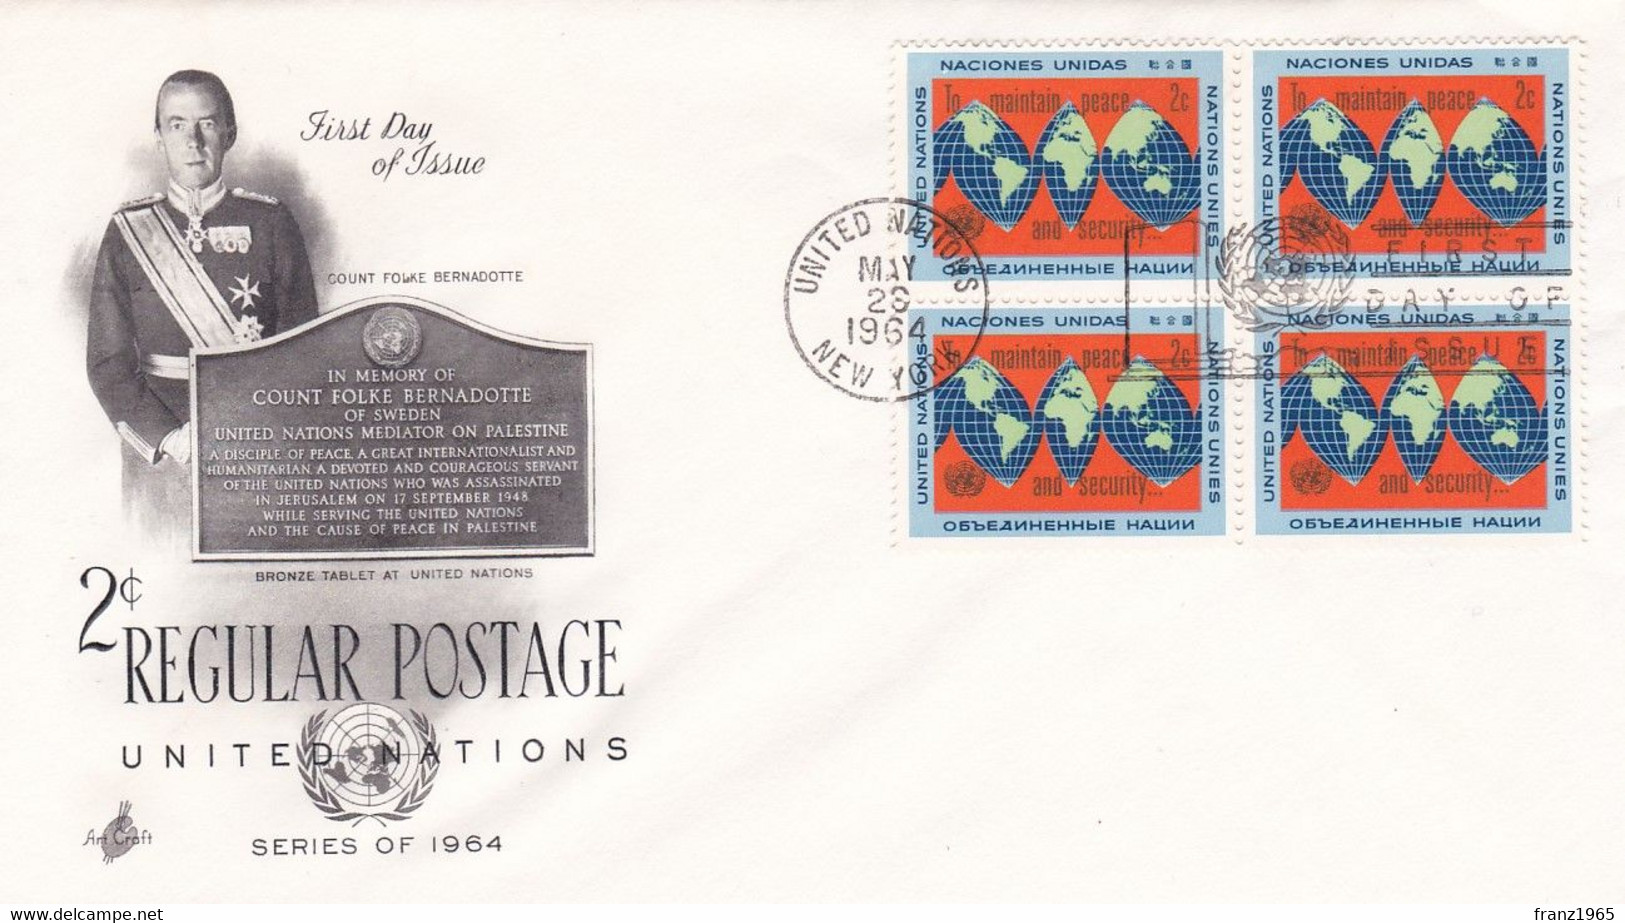 Regular Postage 2 Cents - 1964 - FDC